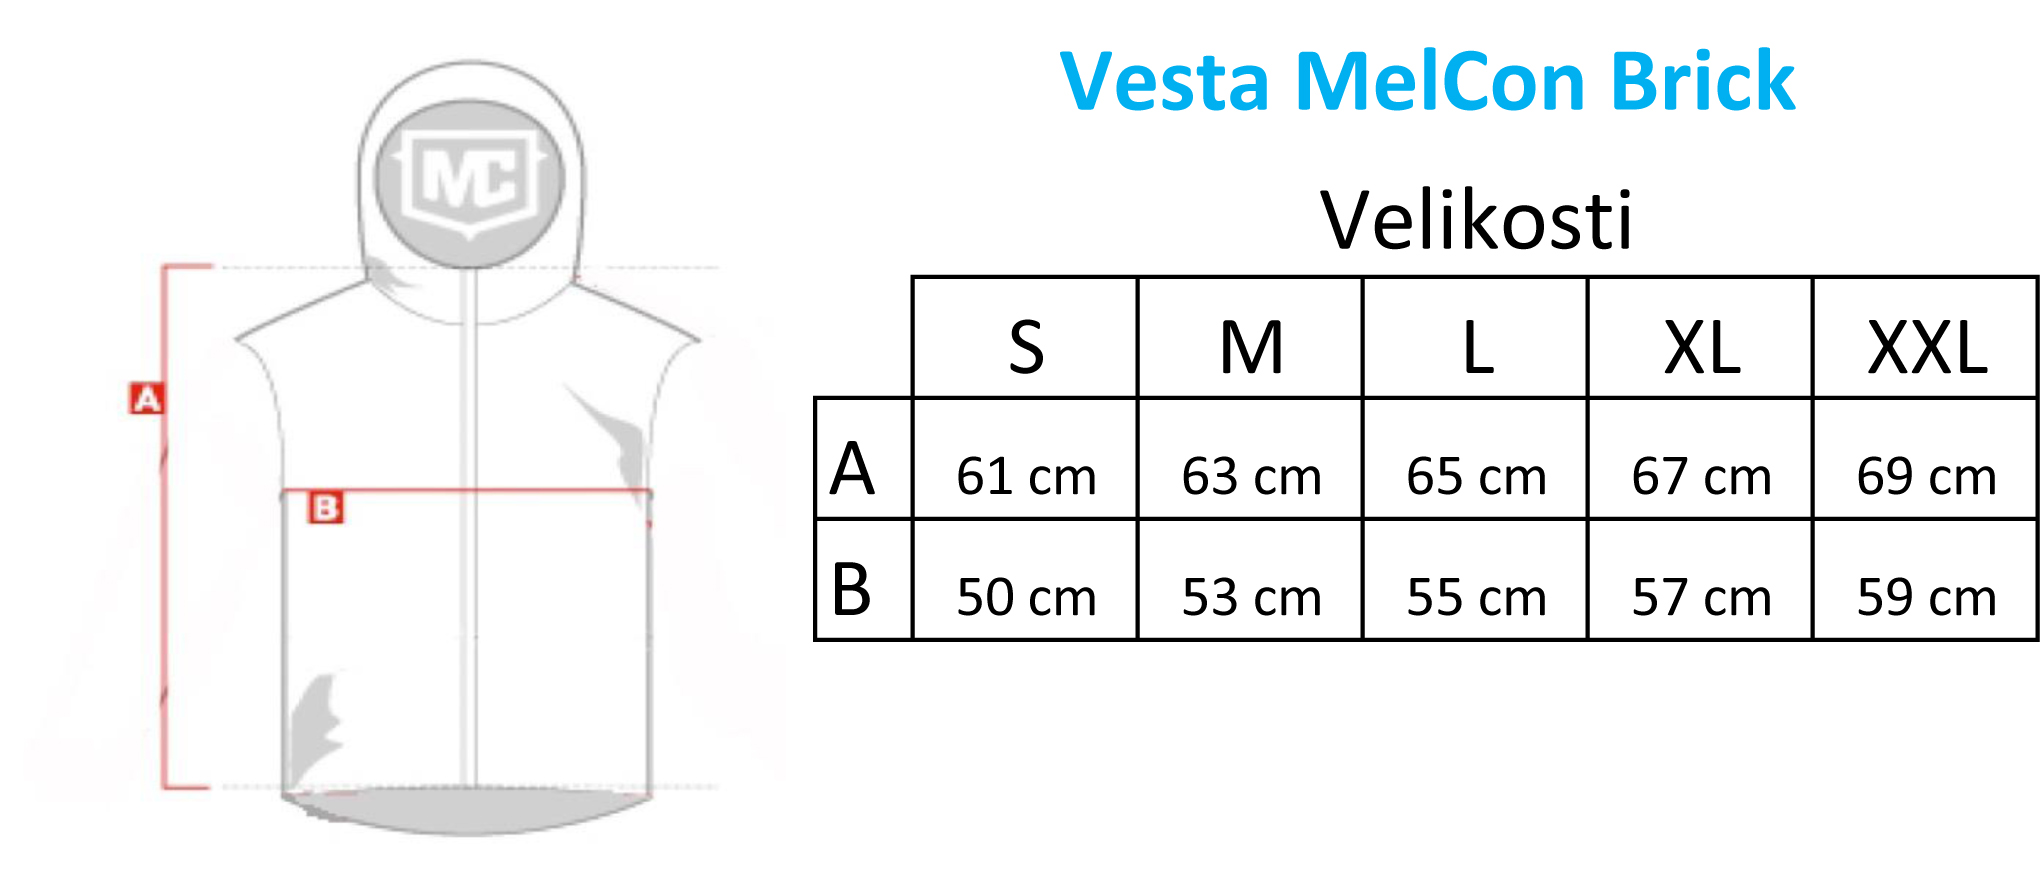 Vesta MelCon Brick